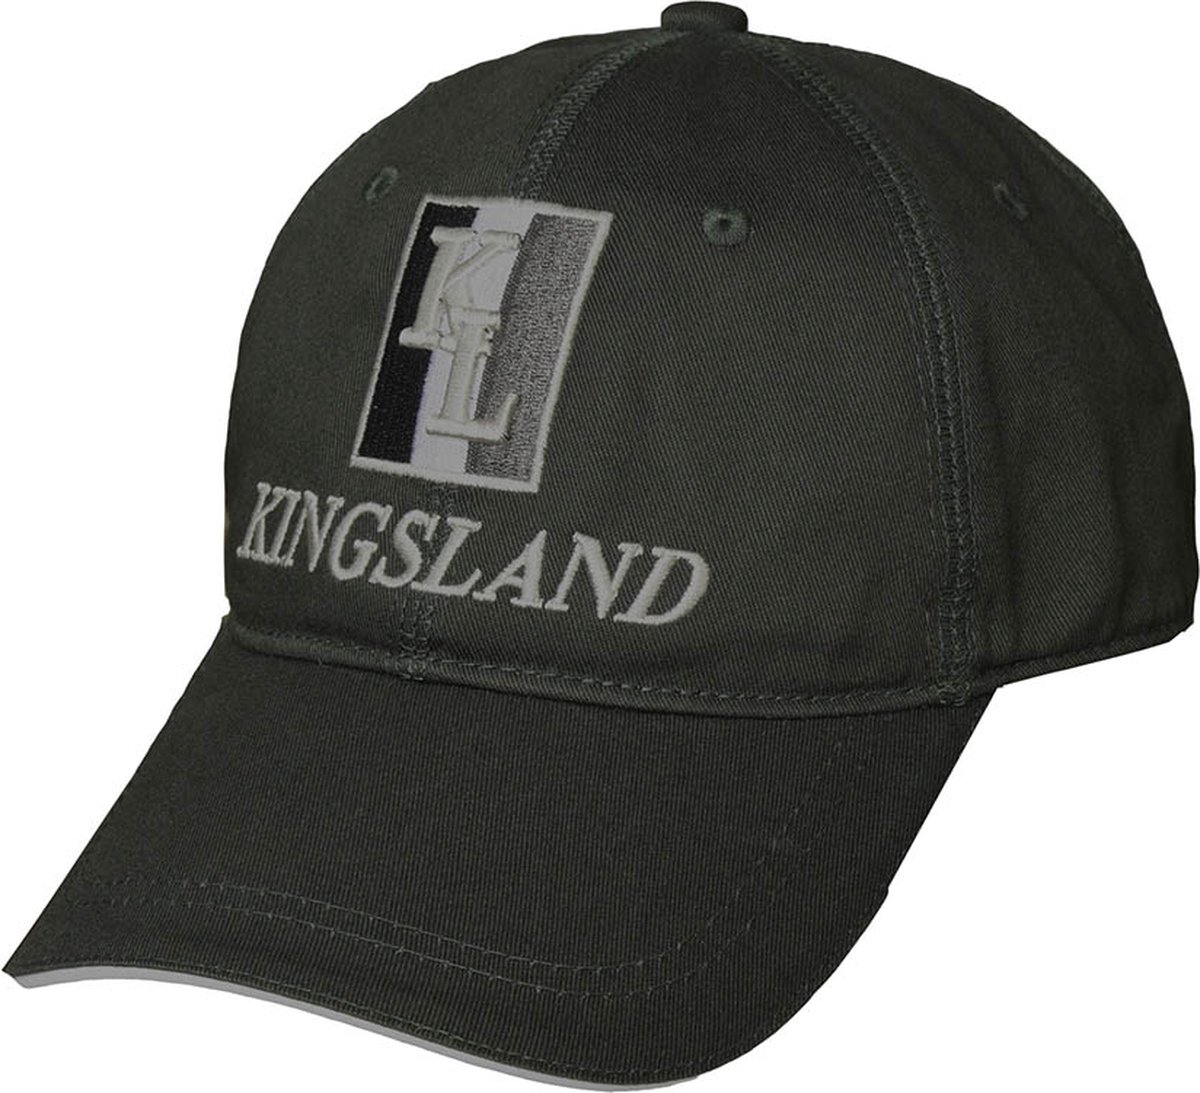 Kingsland Pet Kingsland Classic Limited Groen